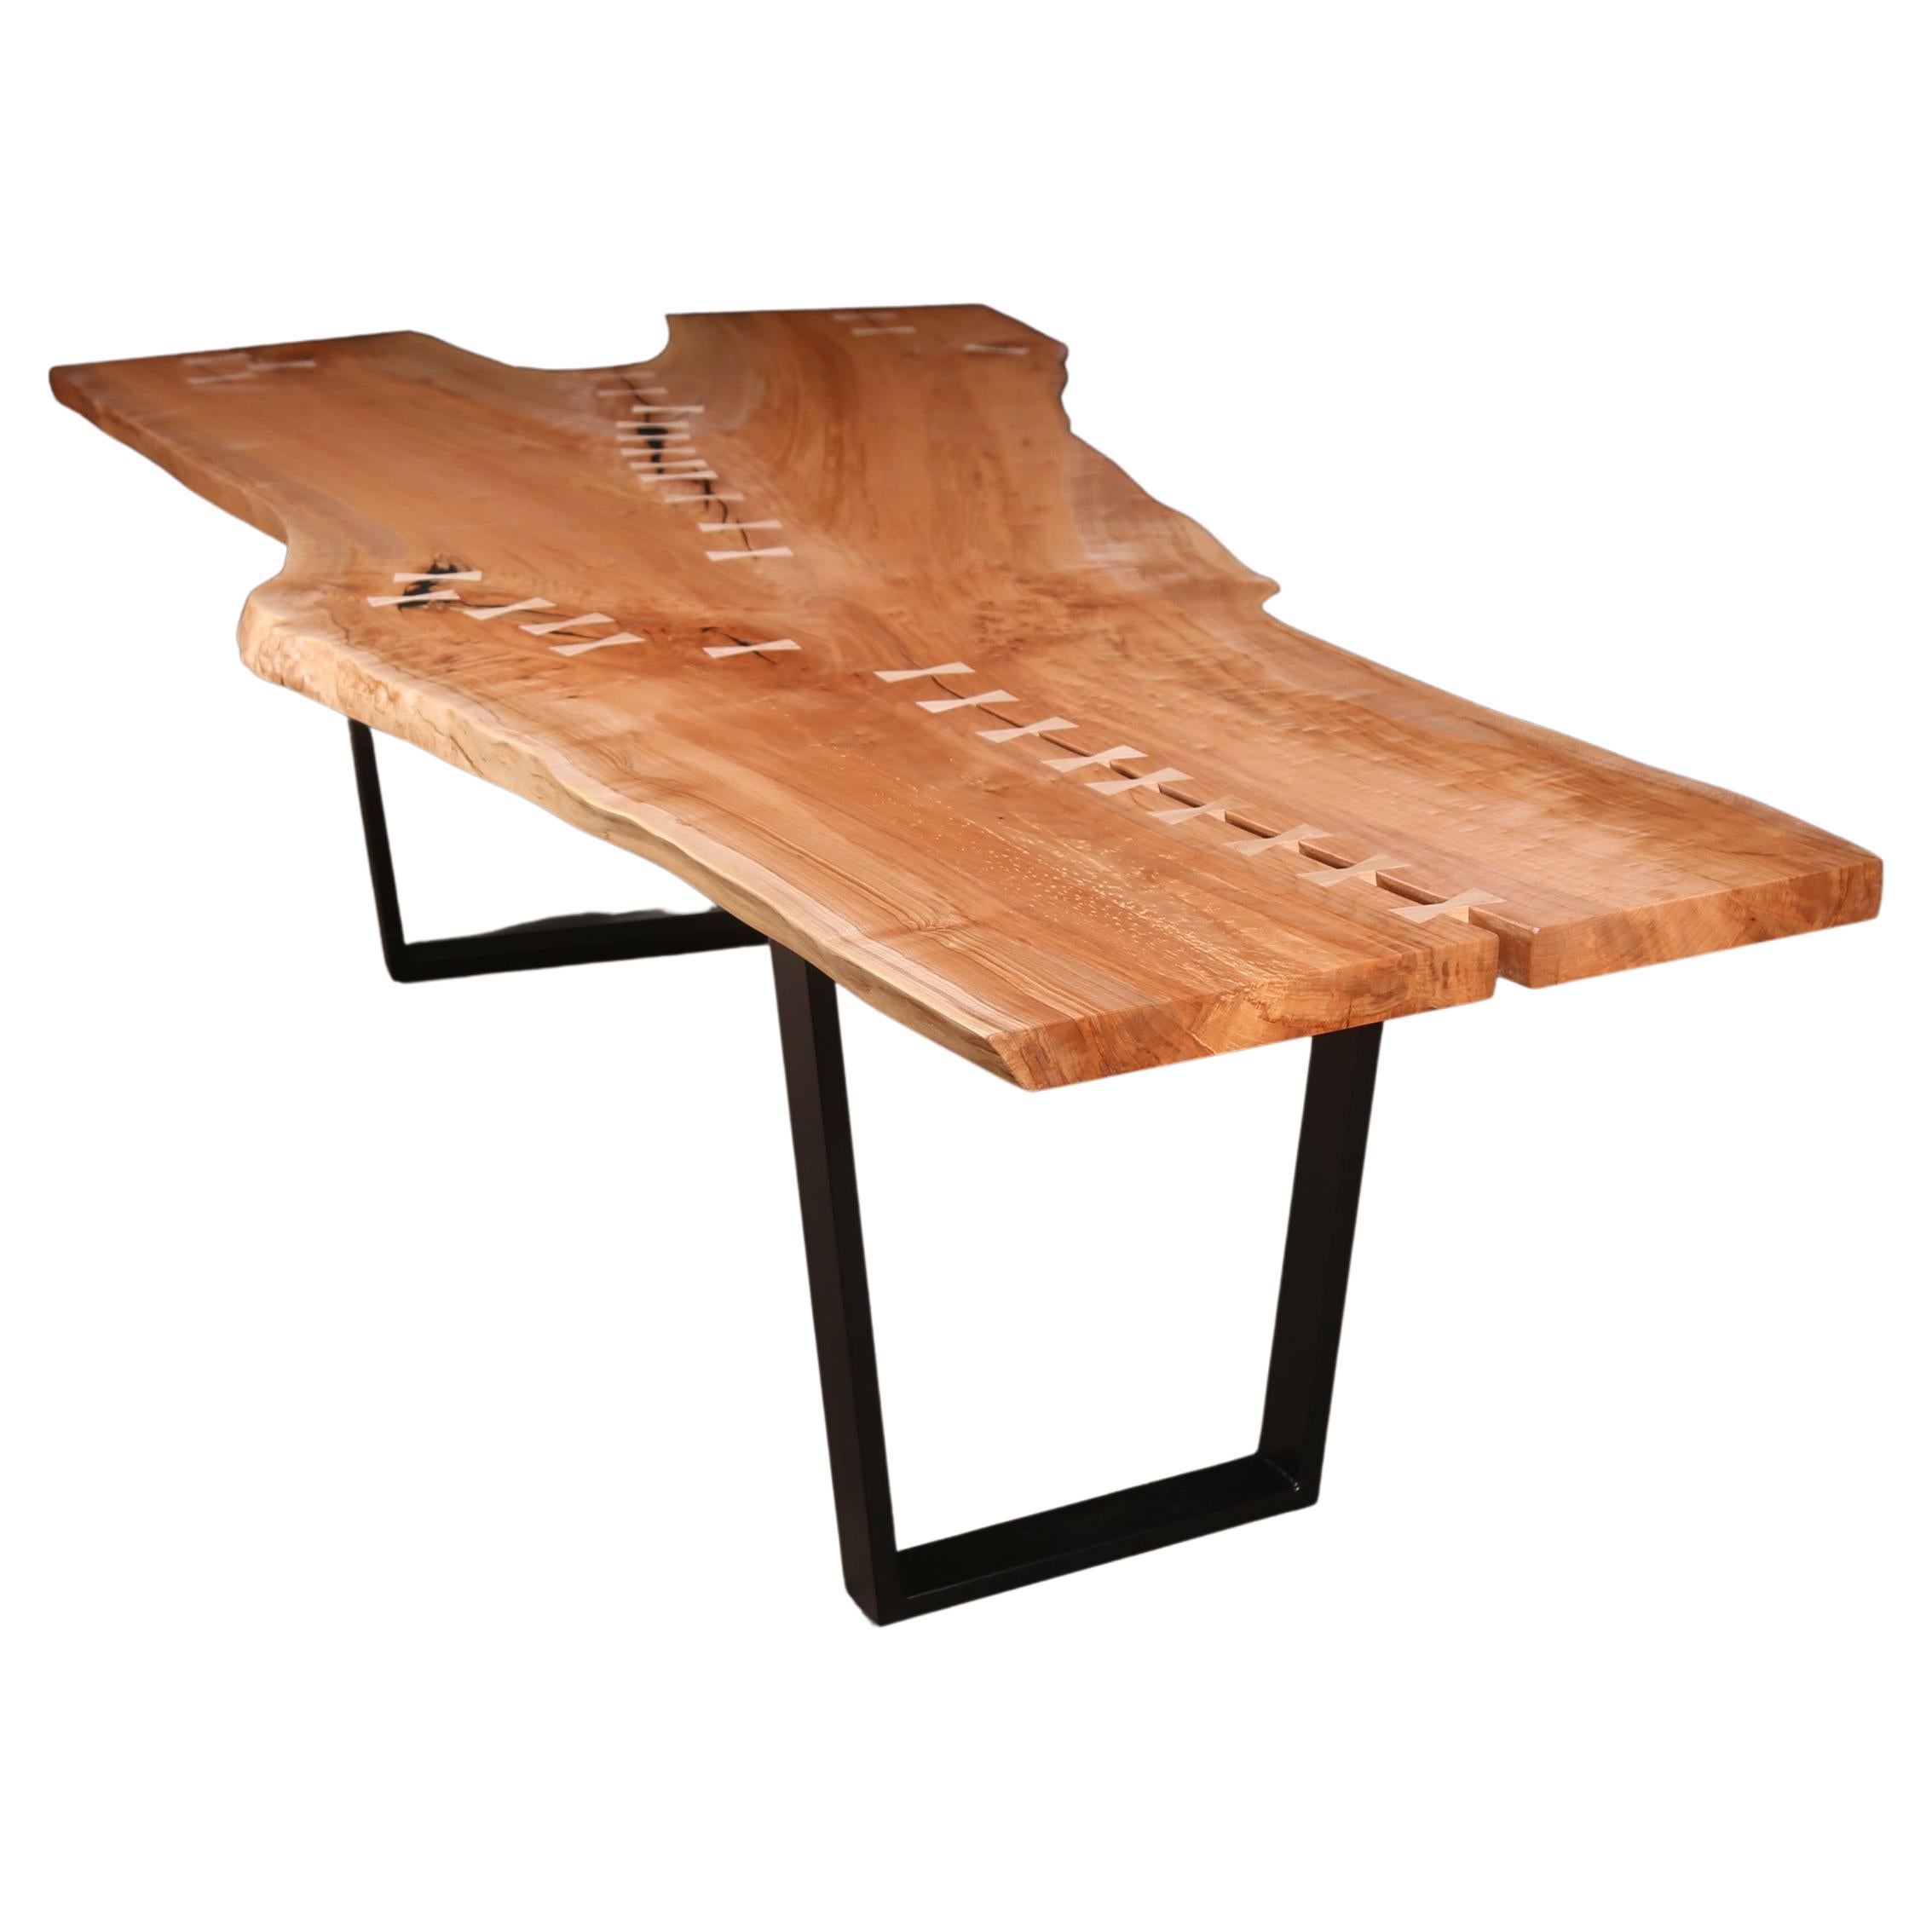 Custom live edge, single slab maple table with bowtie inlay, metal base